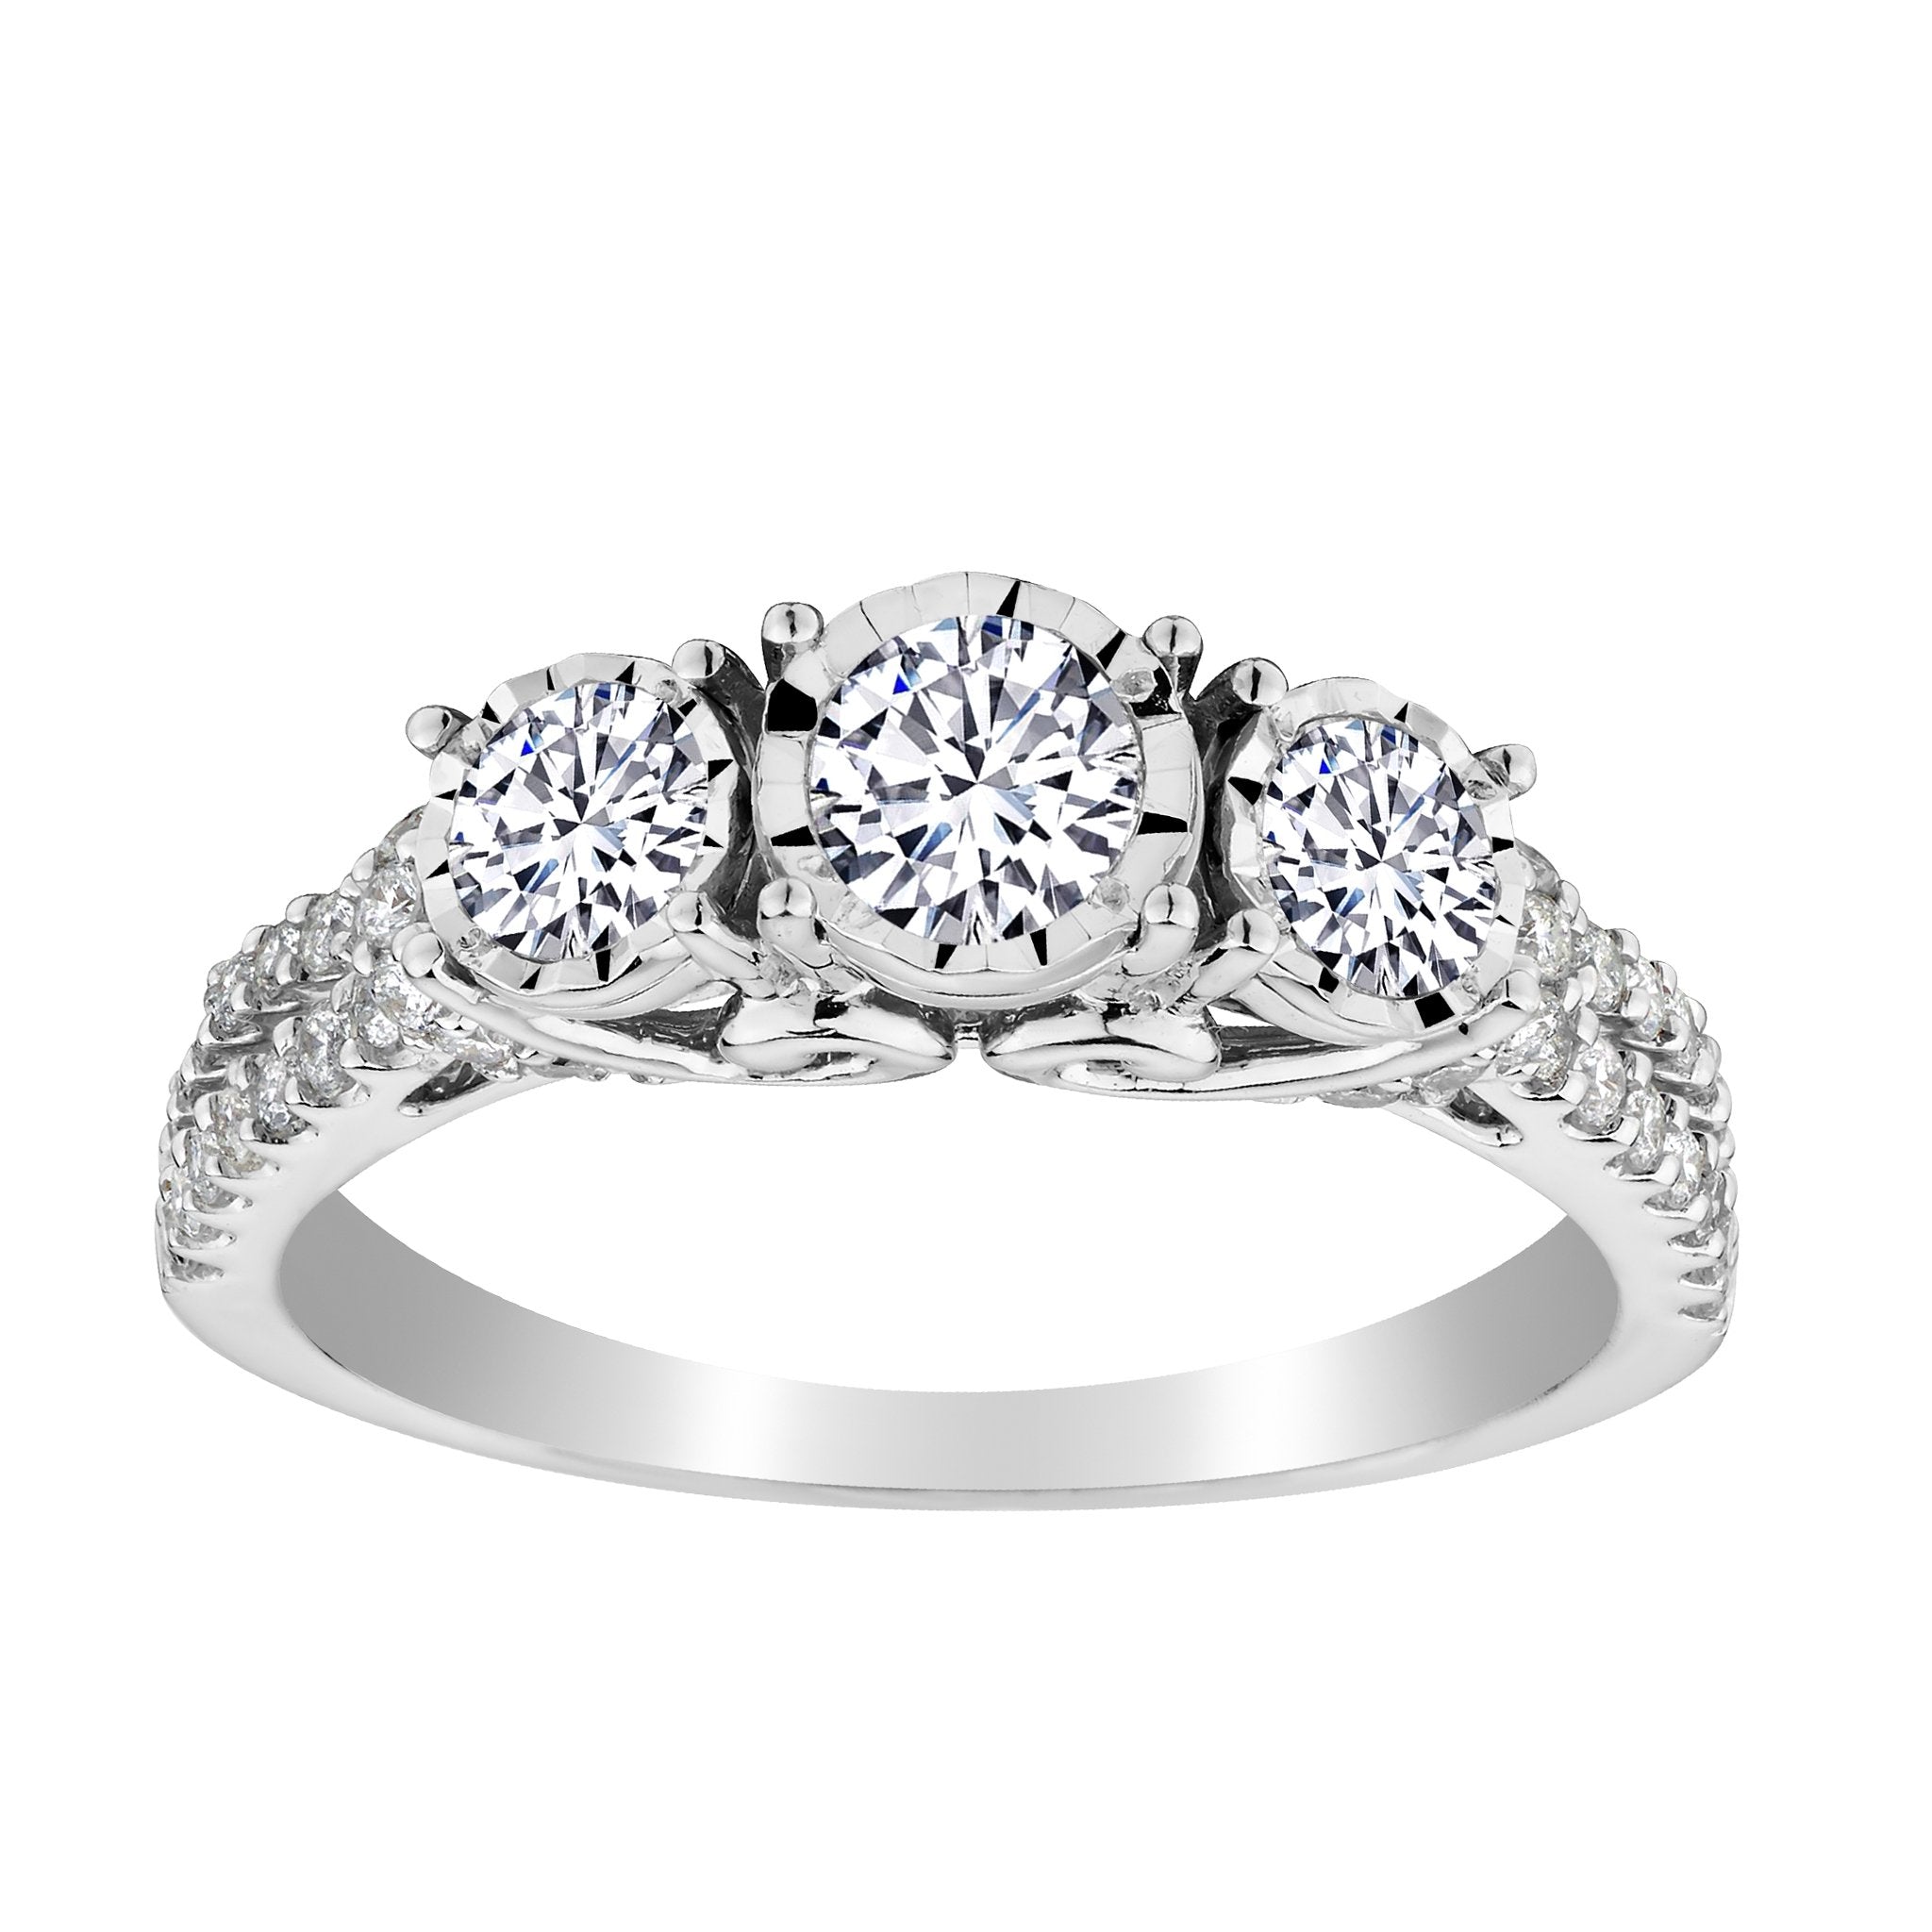 1.00 Carat Diamond "Past, Present, Future" Ring,  10kt White Gold. Griffin Jewellery Designs